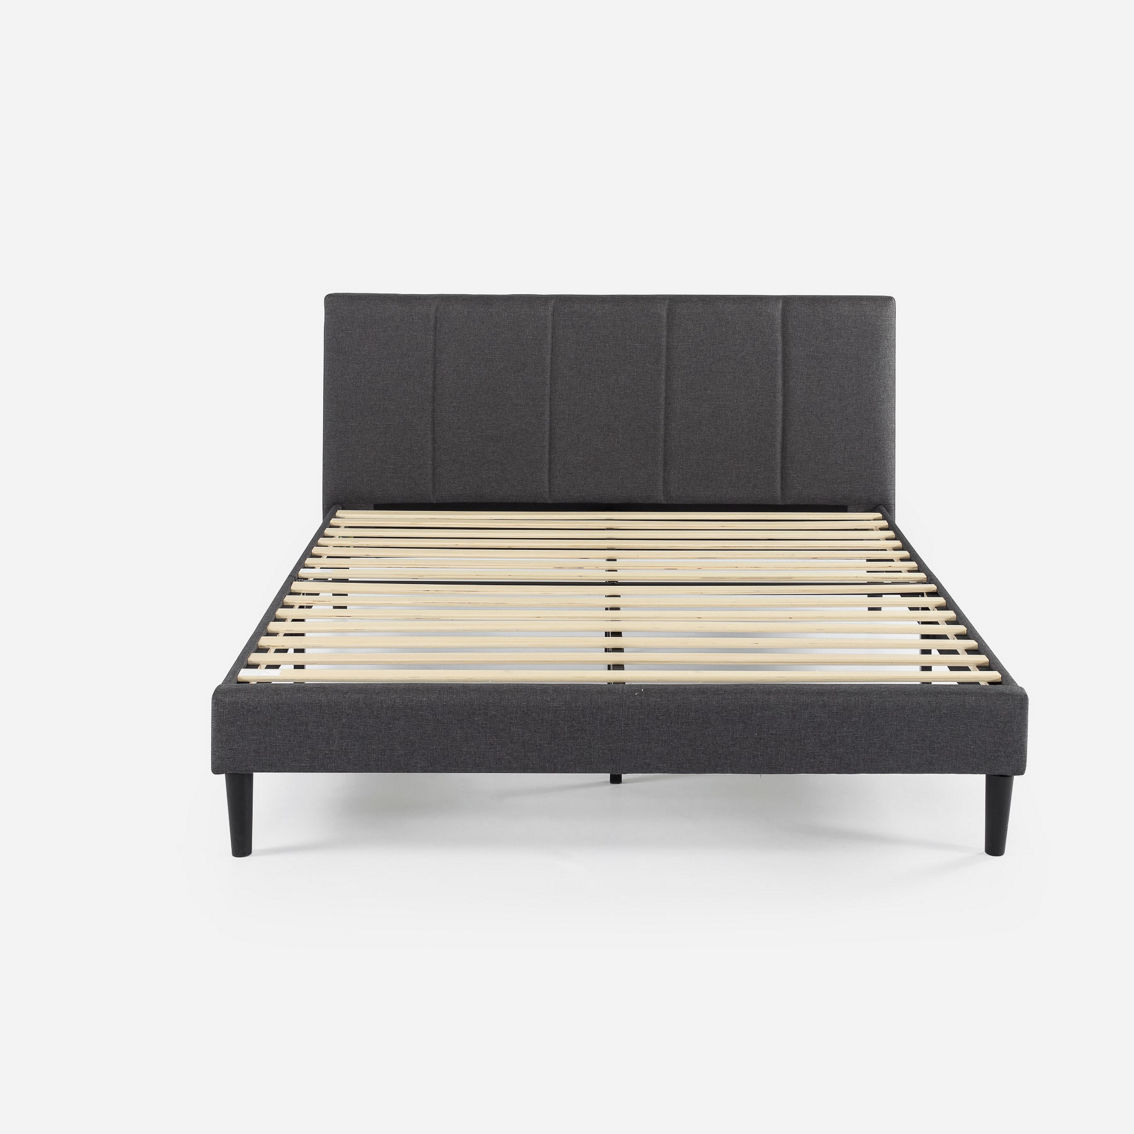 Zinus Upholstered Platform Bed with Short Headboard, Grey - Image 2 of 4